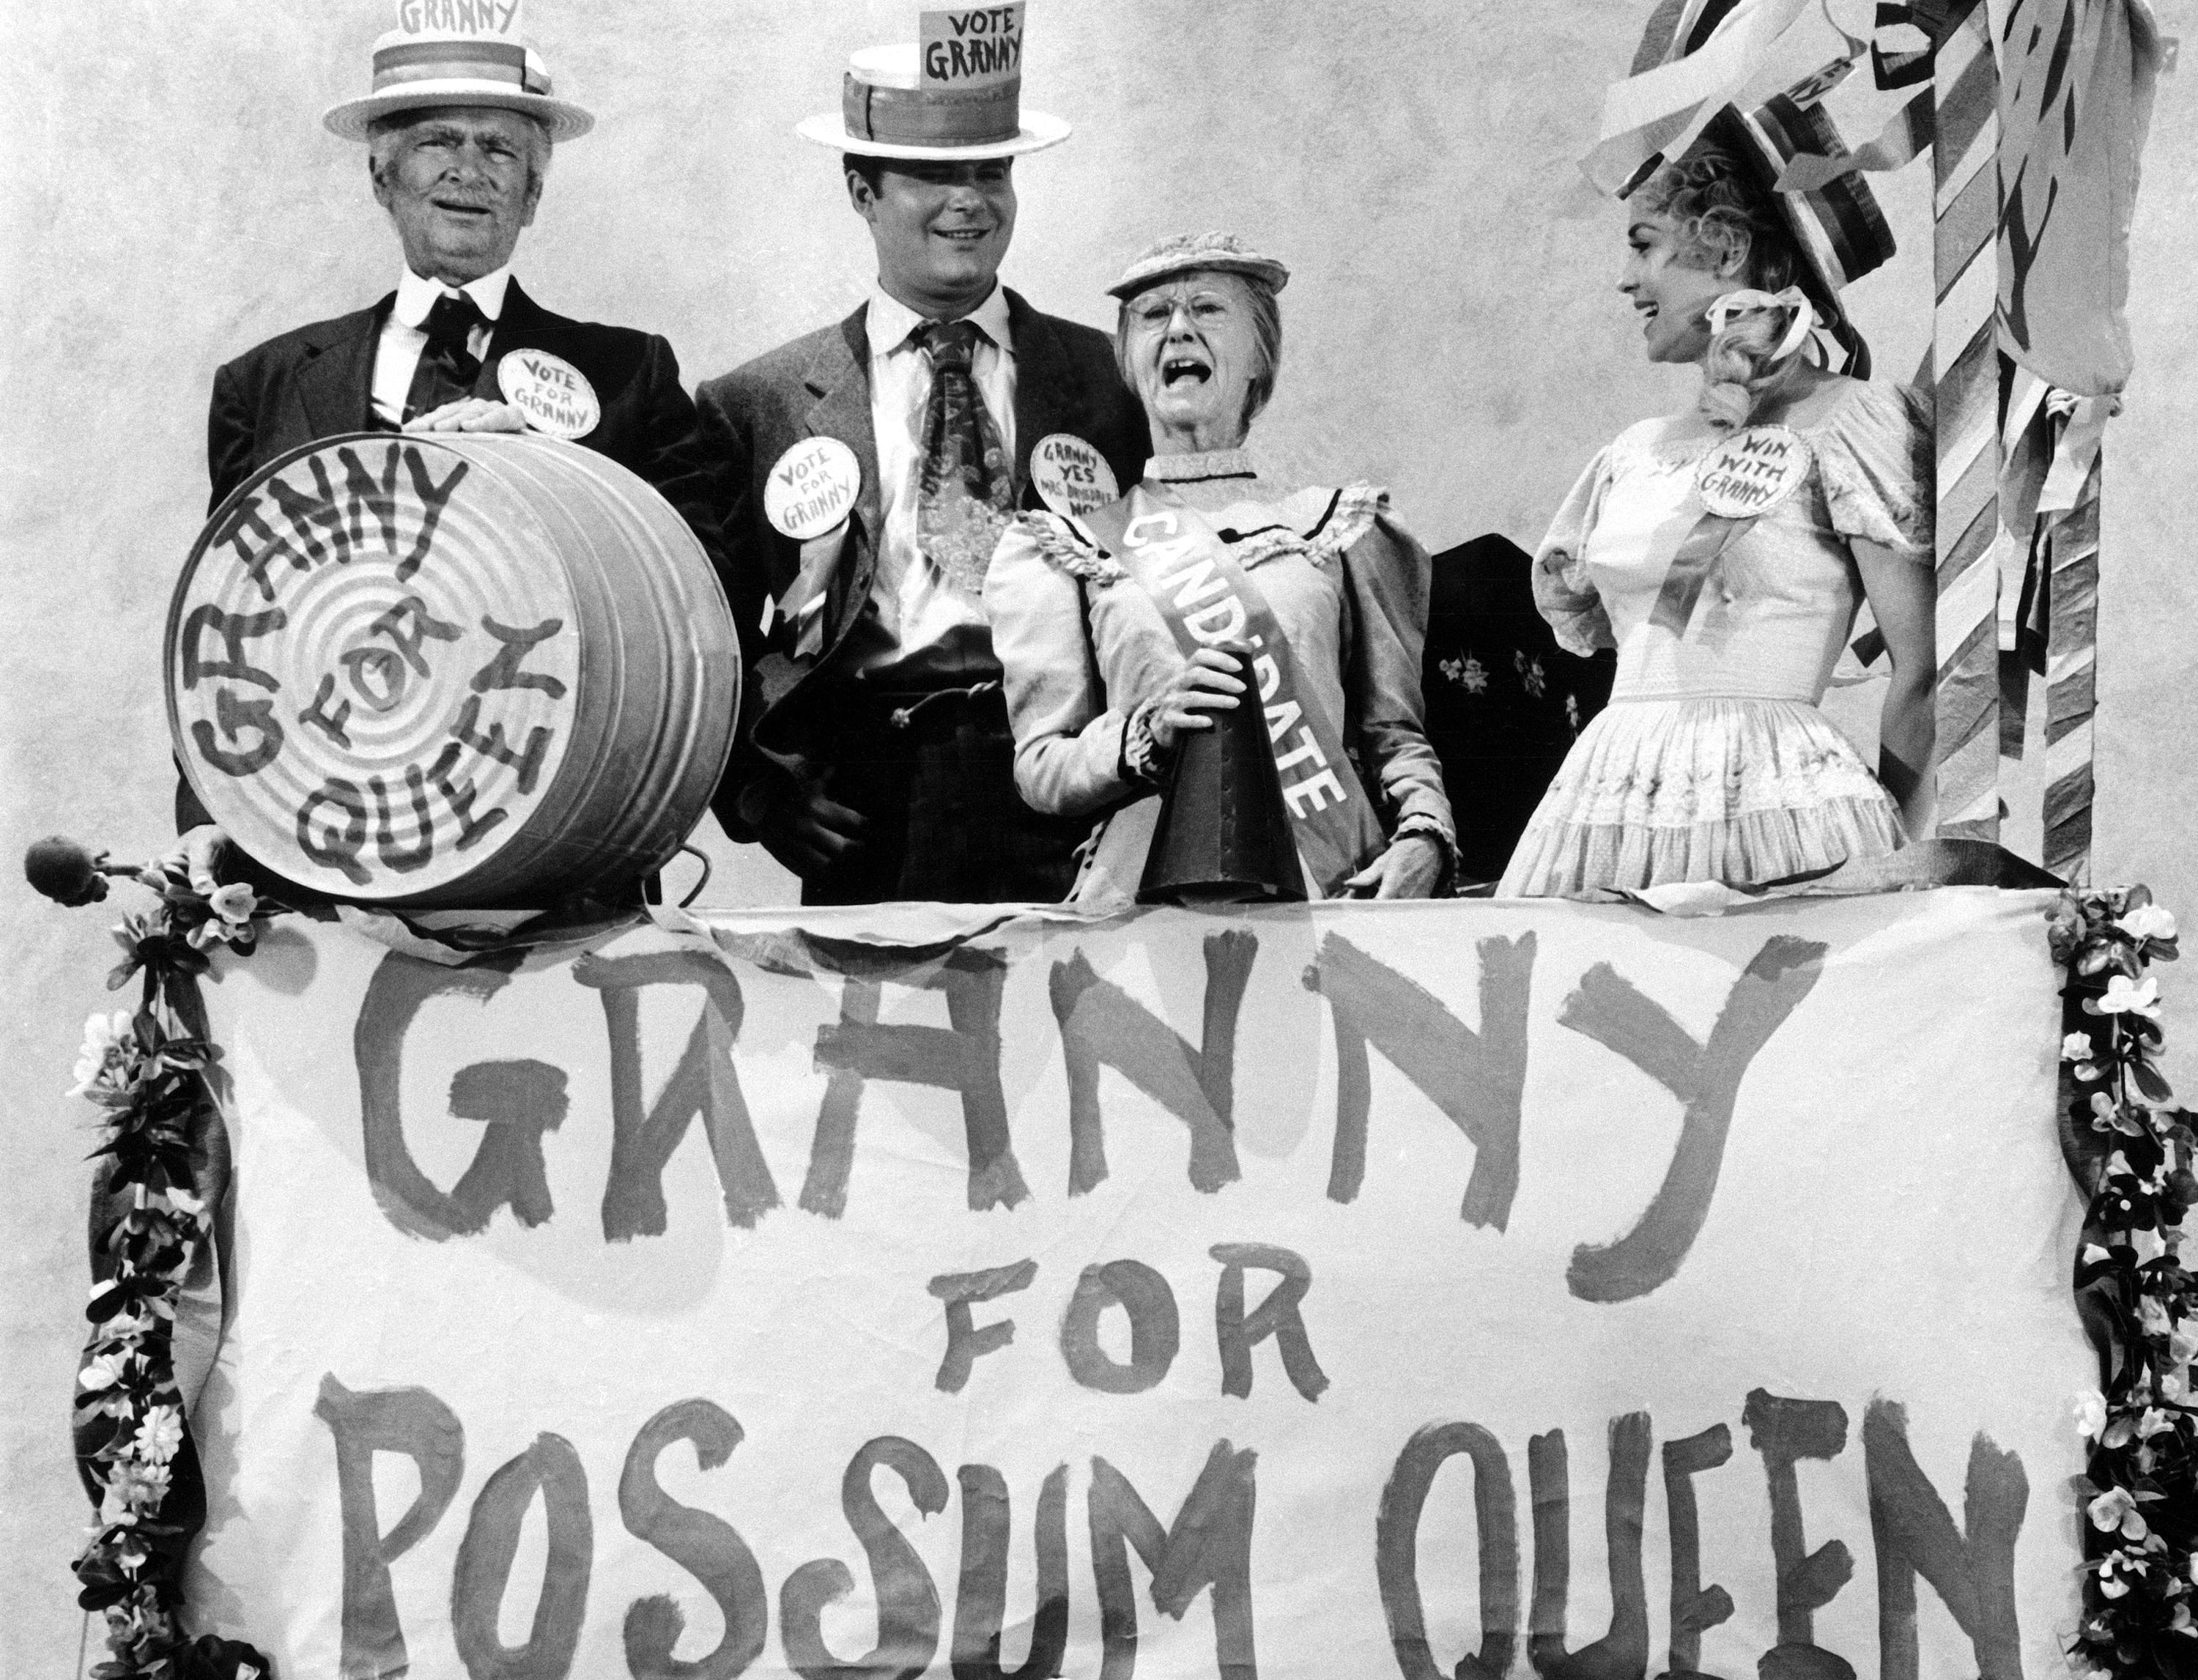 granny beverly hillbillies meme - And Vots Gram Granny Possum Queen For.